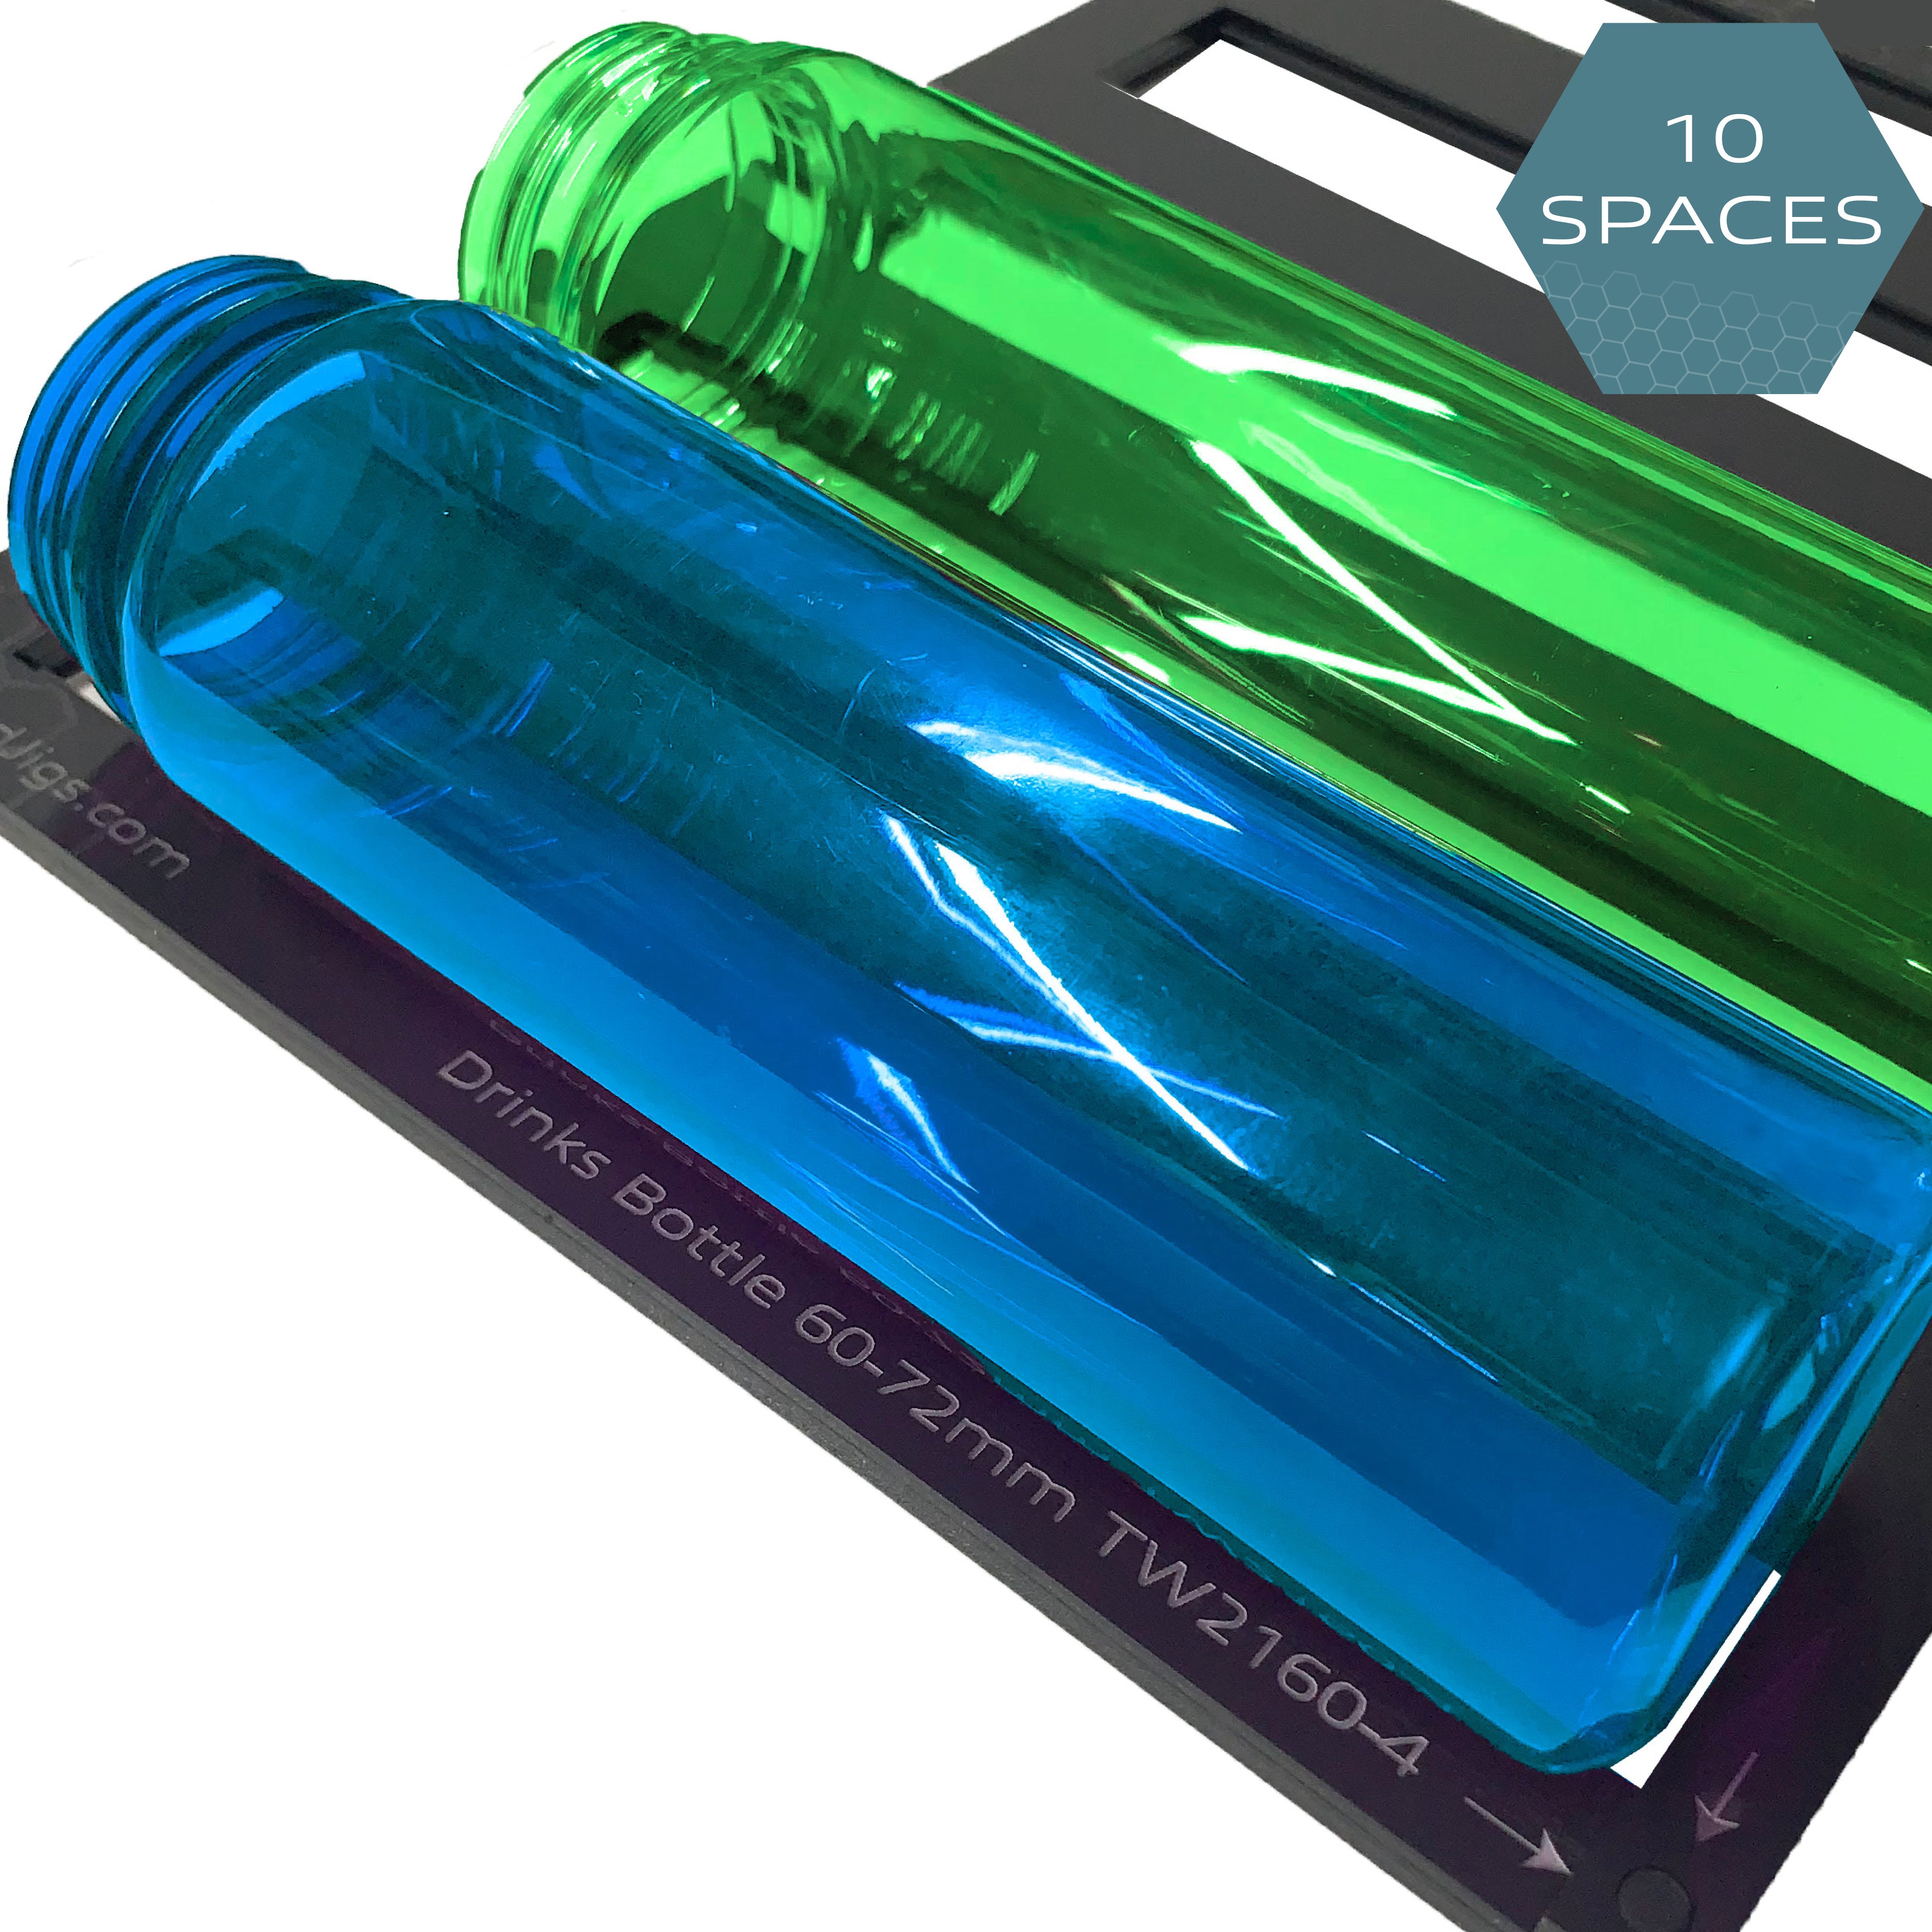 Plastic Drinks Bottle Jig for Printing Bottles - Mimaki UJF-6042 Flatbed Printer (10 Spaces)